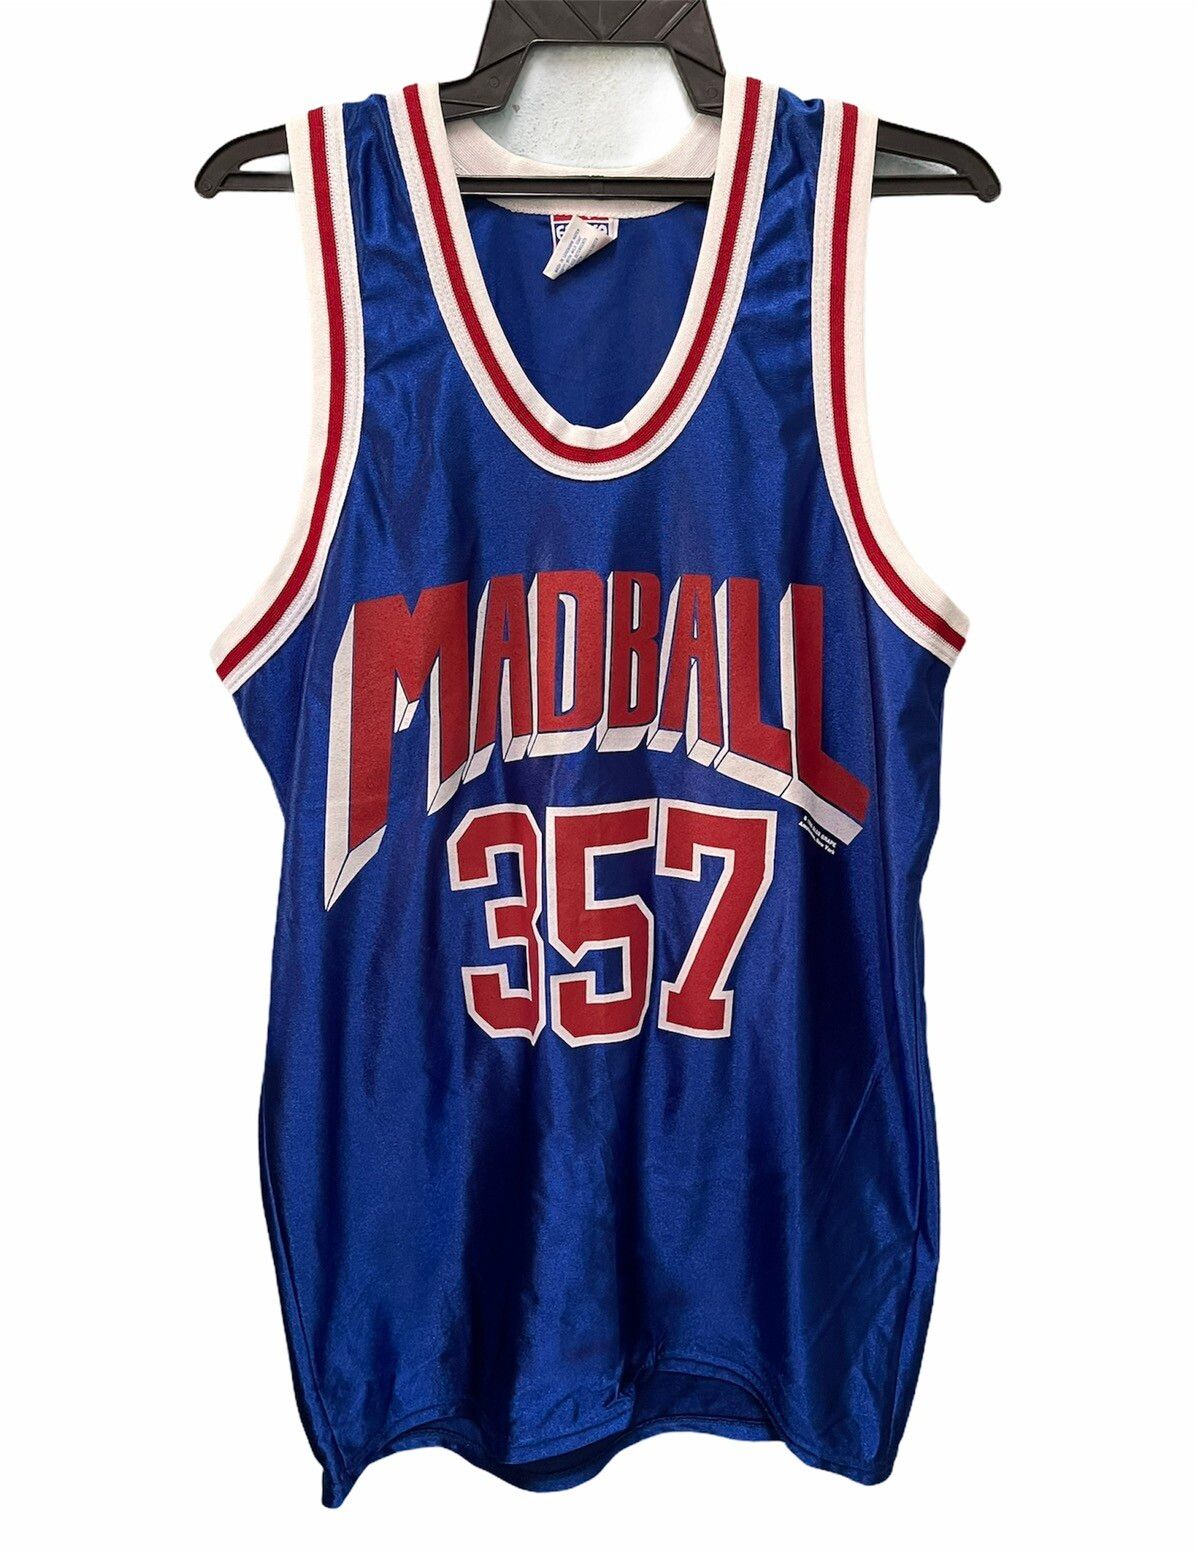 Vintage Madball 357 NYC basketball jersey - 1